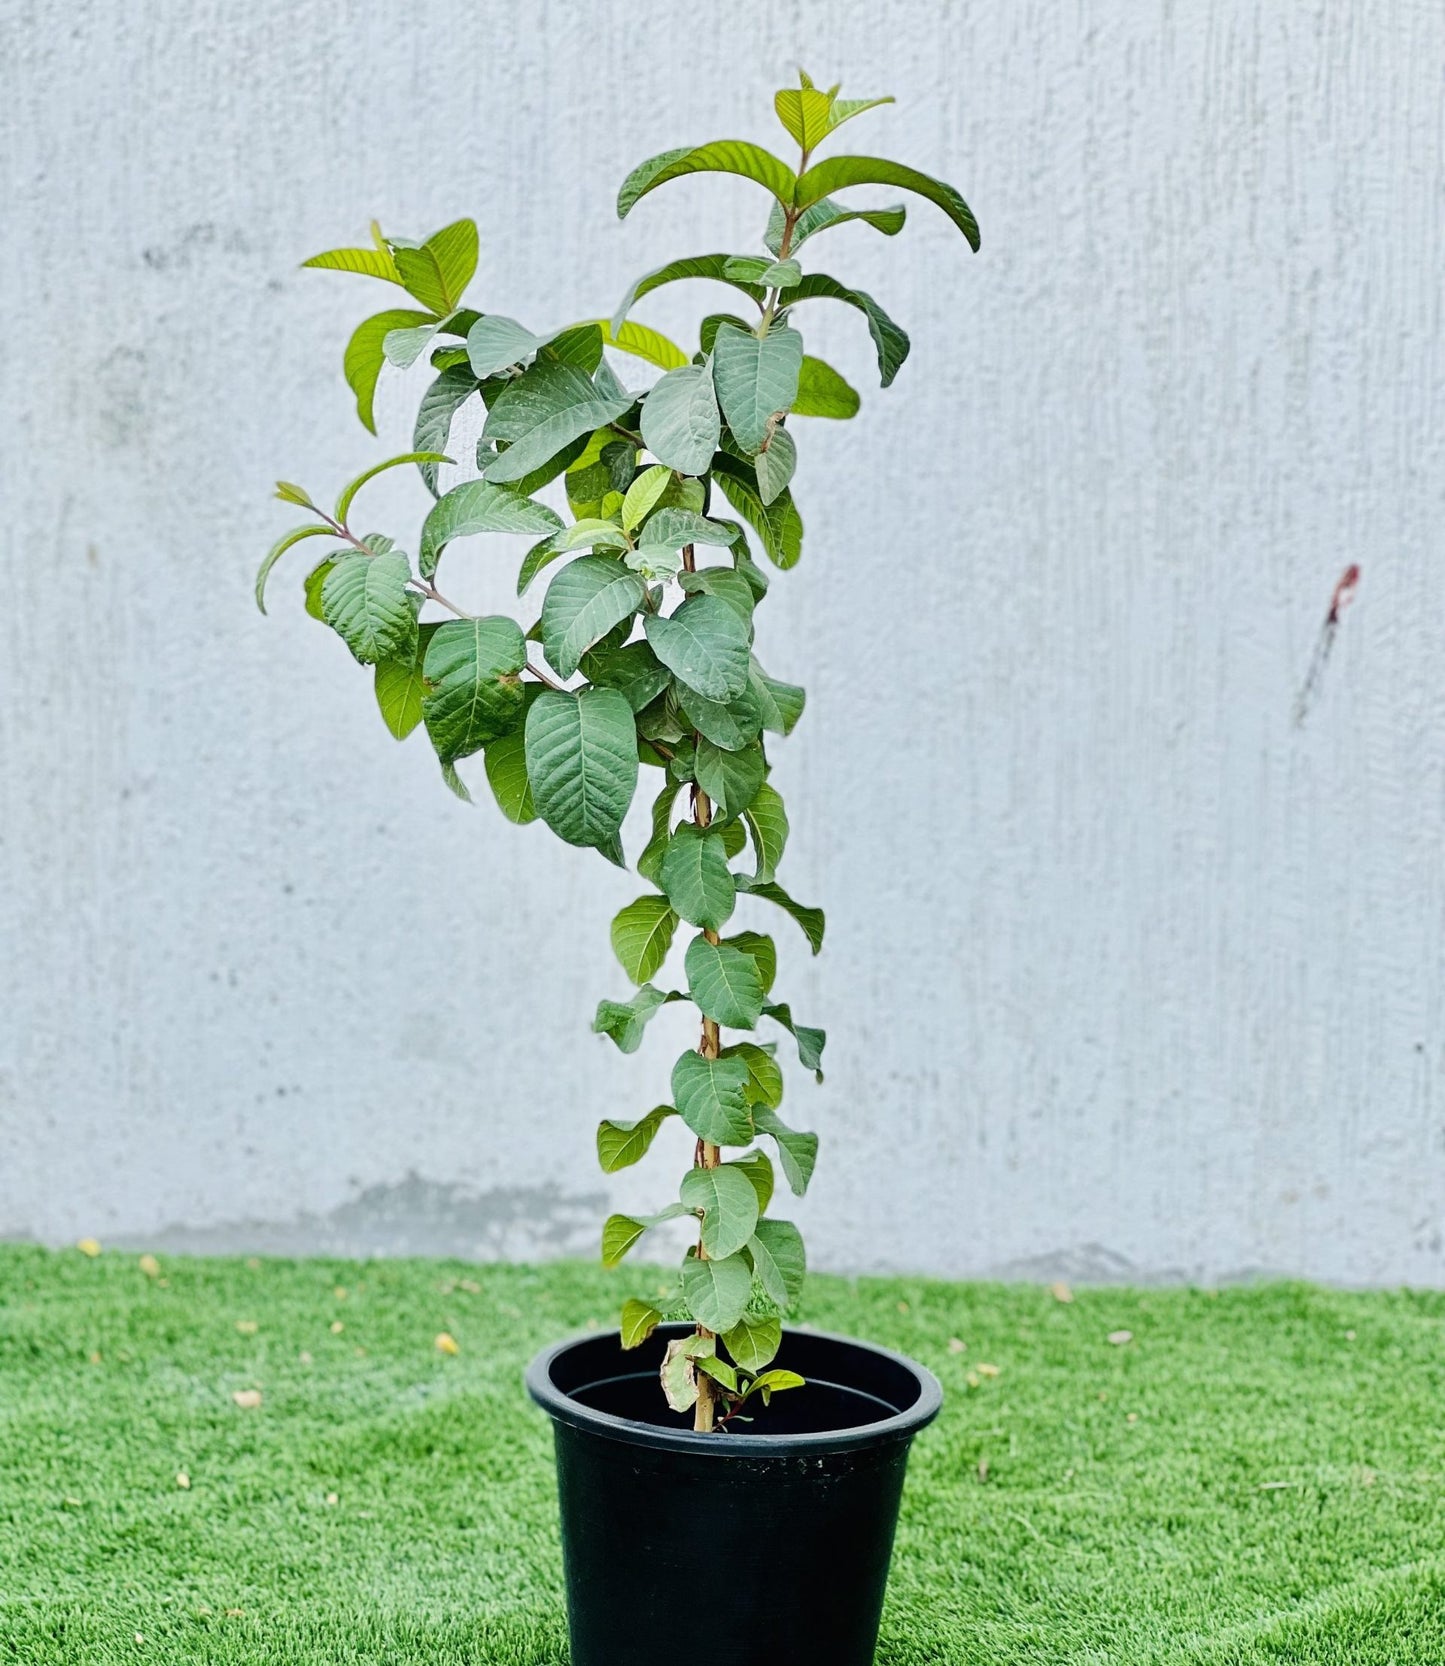 Psidium guajava Or Guava Tree 1.2 - 2.0m شجرة الجوافة (Pakistani)